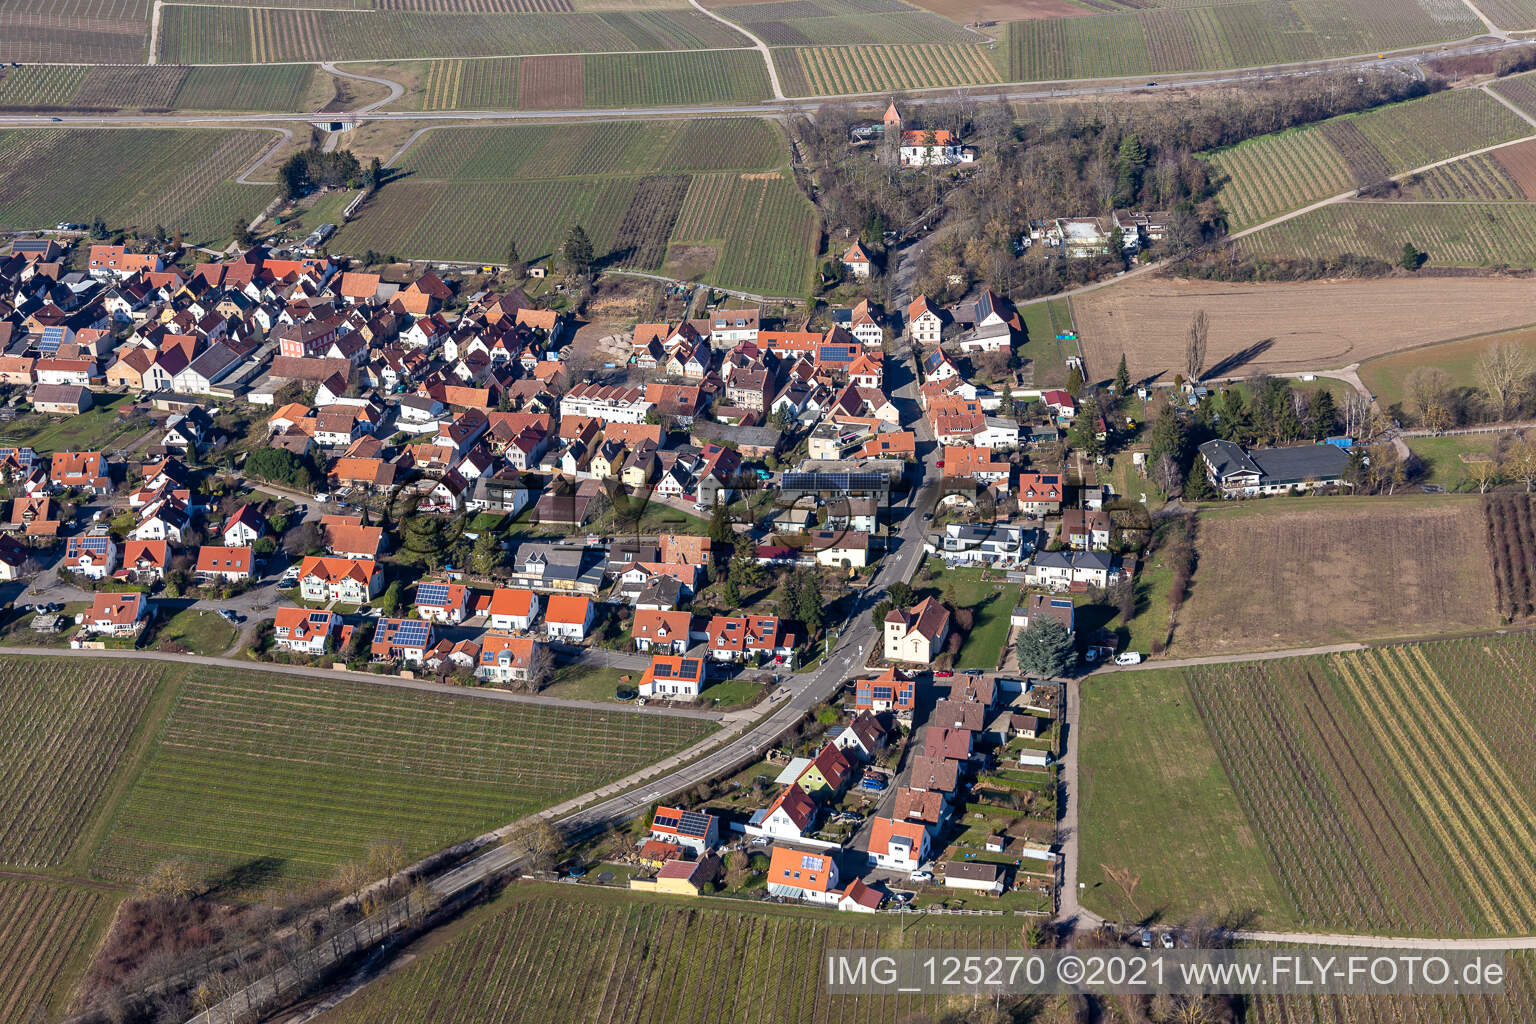 Drone image of District Wollmesheim in Landau in der Pfalz in the state Rhineland-Palatinate, Germany